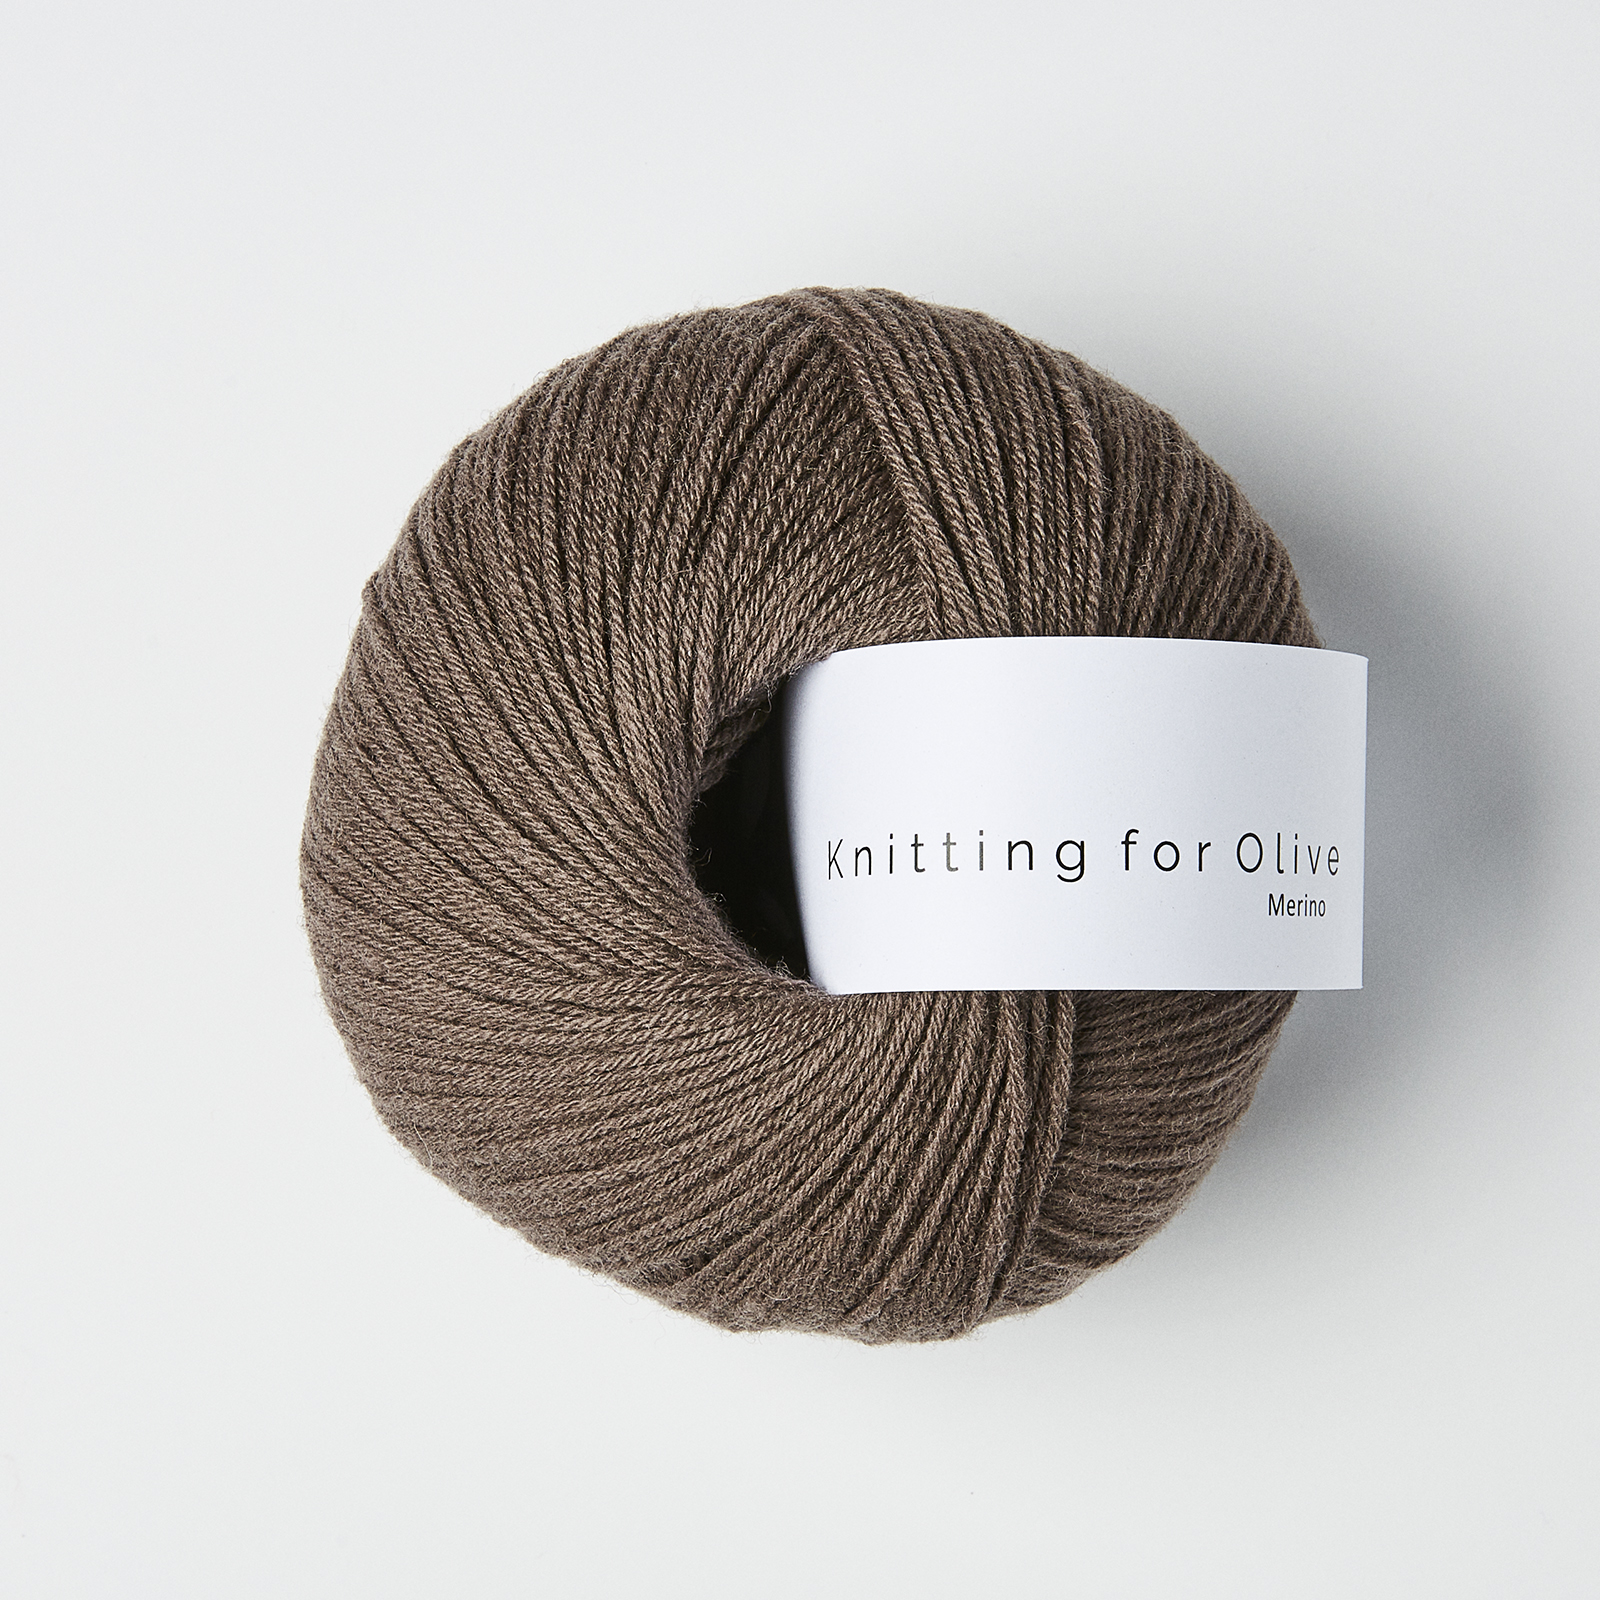 Merino (Knitting for Olive): plum clay